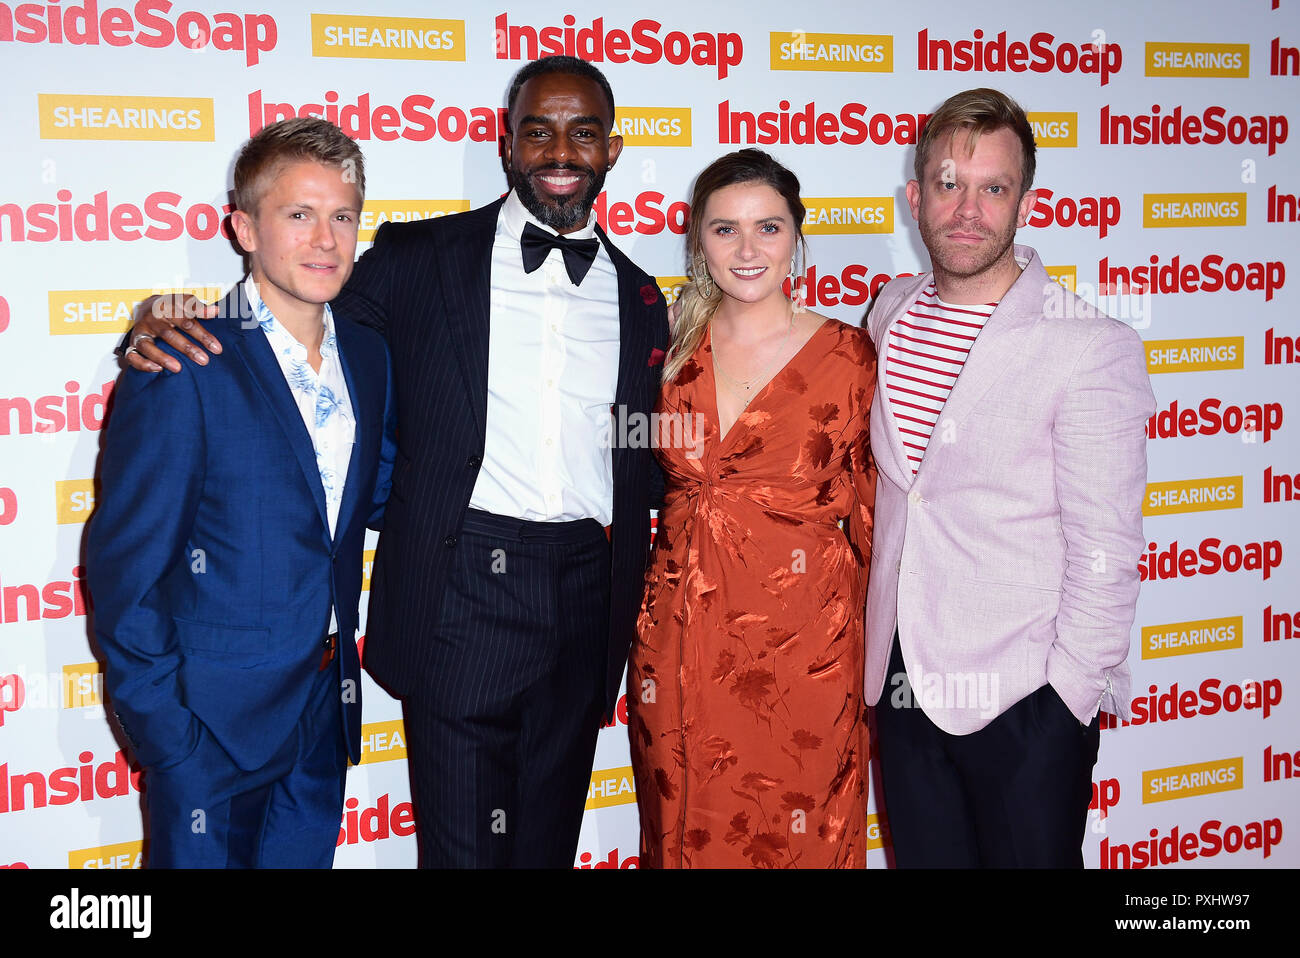 George Rainsford, Charles Venn, Chelsea Halfpenny and William Beck attending the Inside Soap Awards 2018 held at 100 Wardour Street, Soho, London. Stock Photo